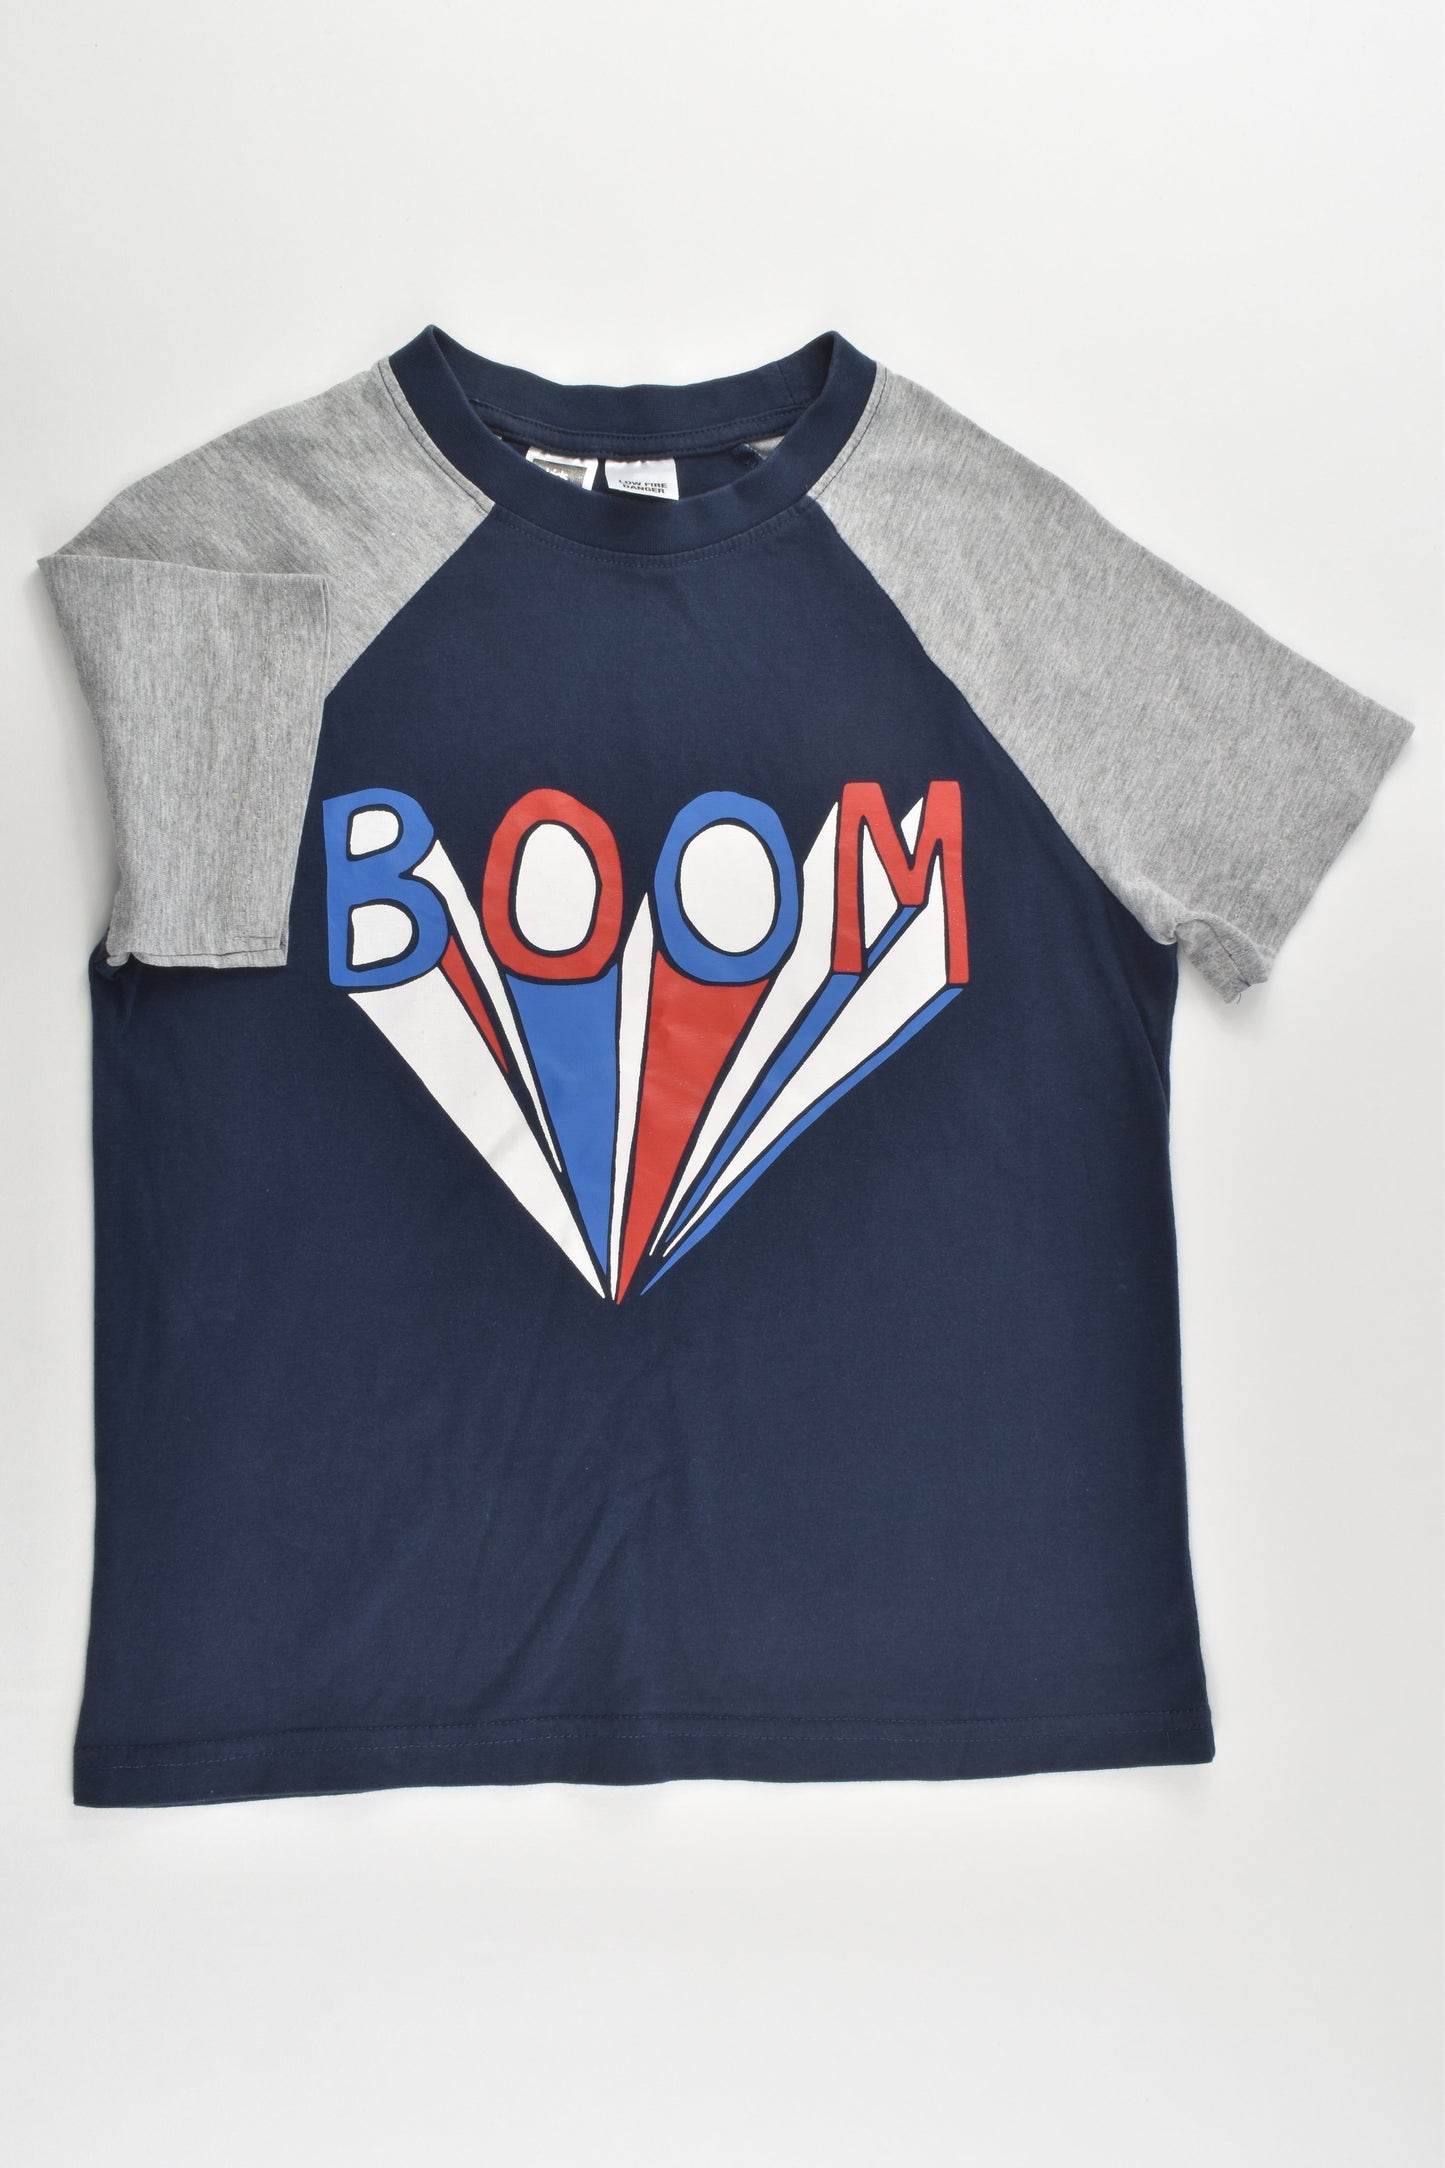 Kids & Co Size 7 'Boom!' T-shirt